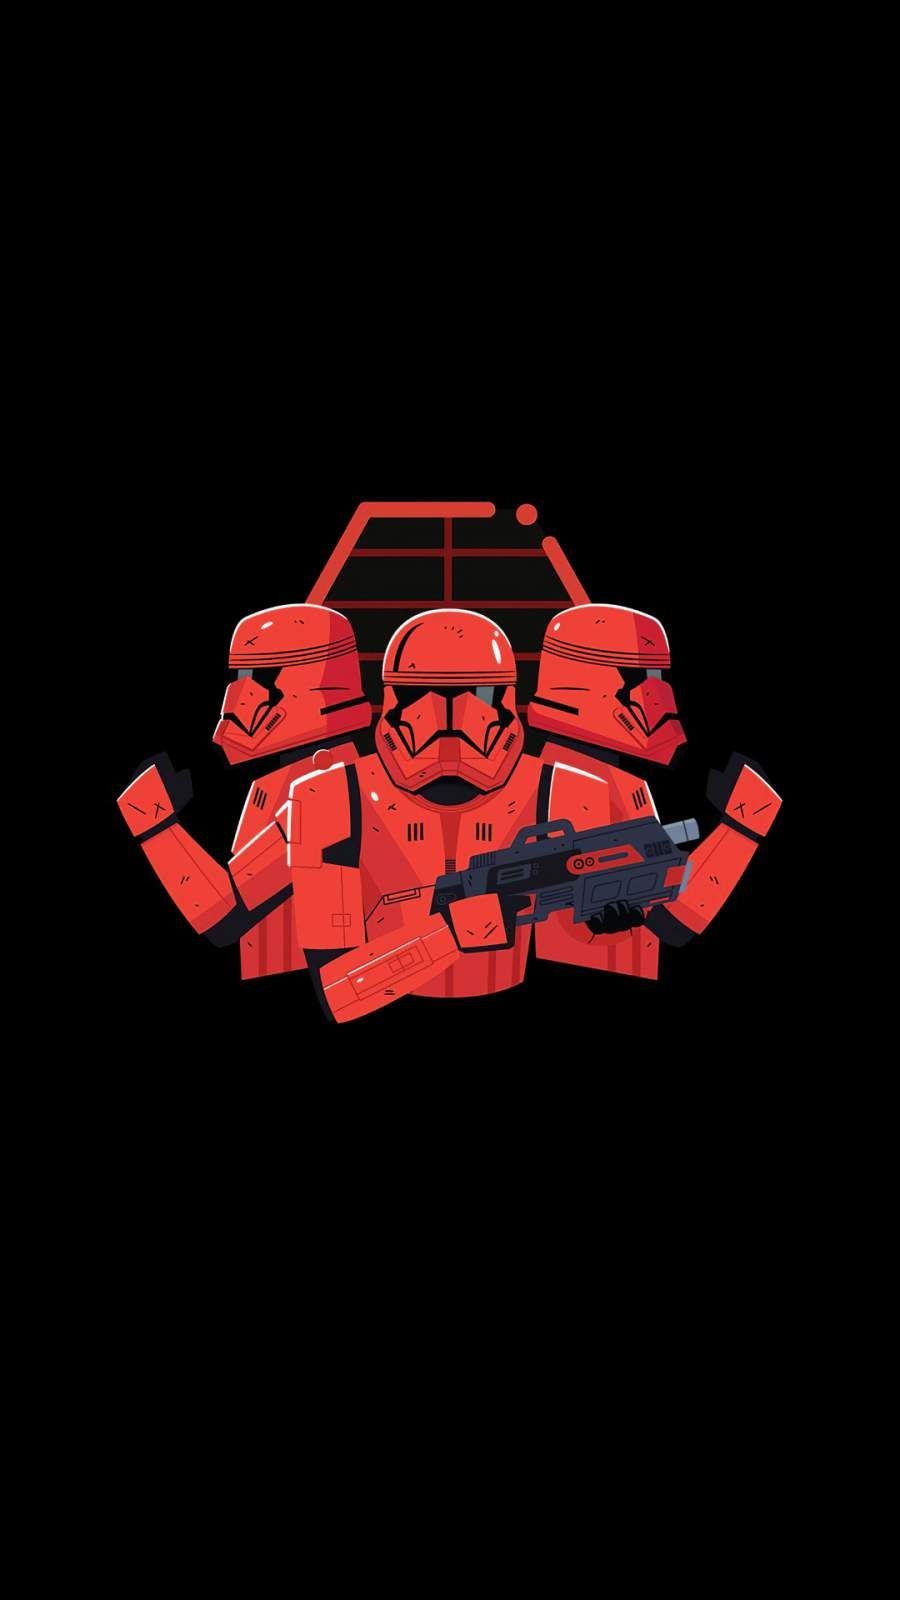 Star Wars Stormtrooper iPhone Wallpaper .com